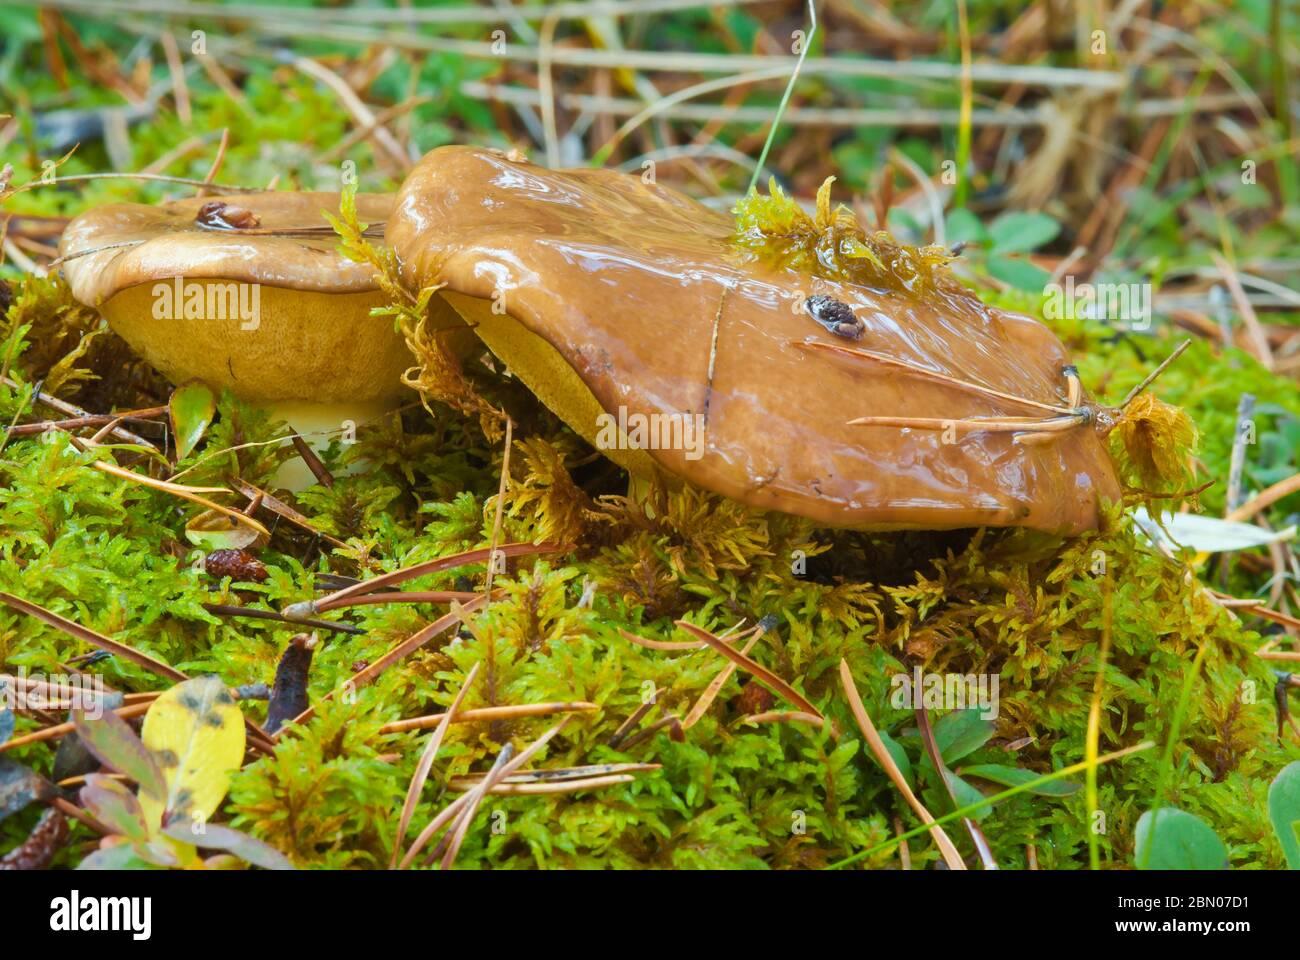 short-stalked-bolete-suillus-brevipes-growing-among-moss-in-jasper-national-park-in-alberta-canada-2BN07D1.jpg